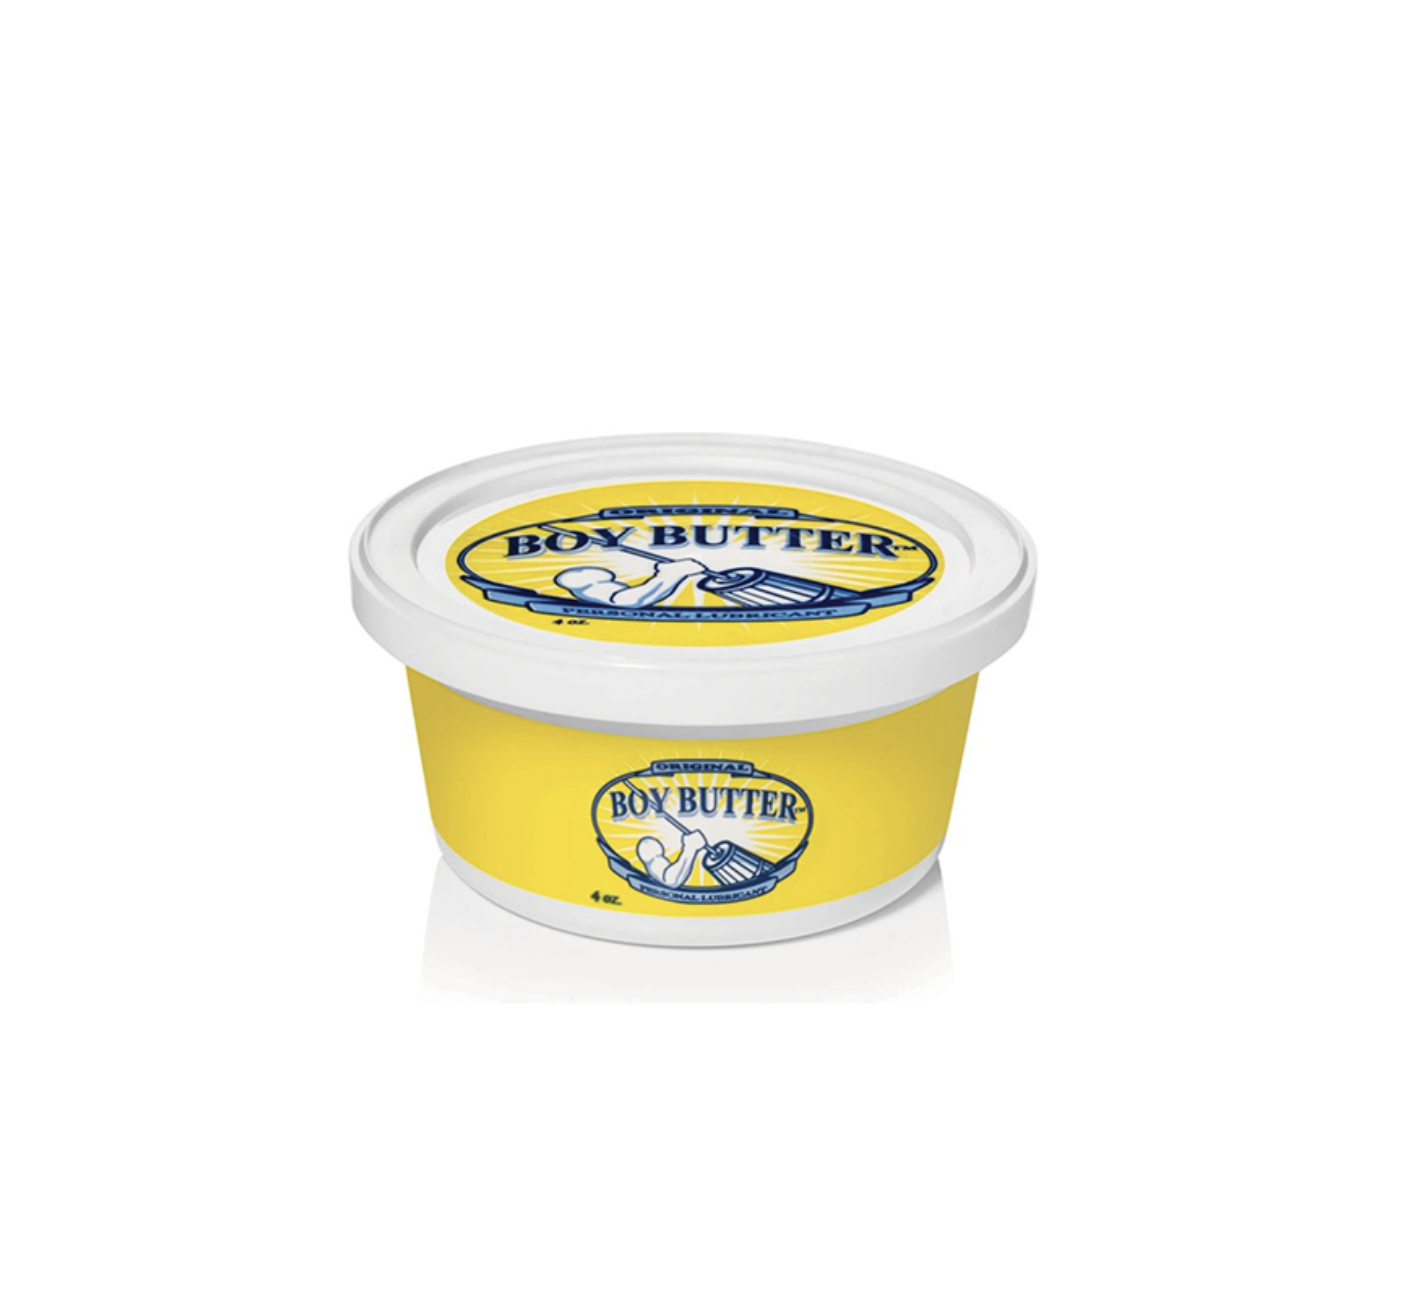 Boy Butter Original Tub 04 oz